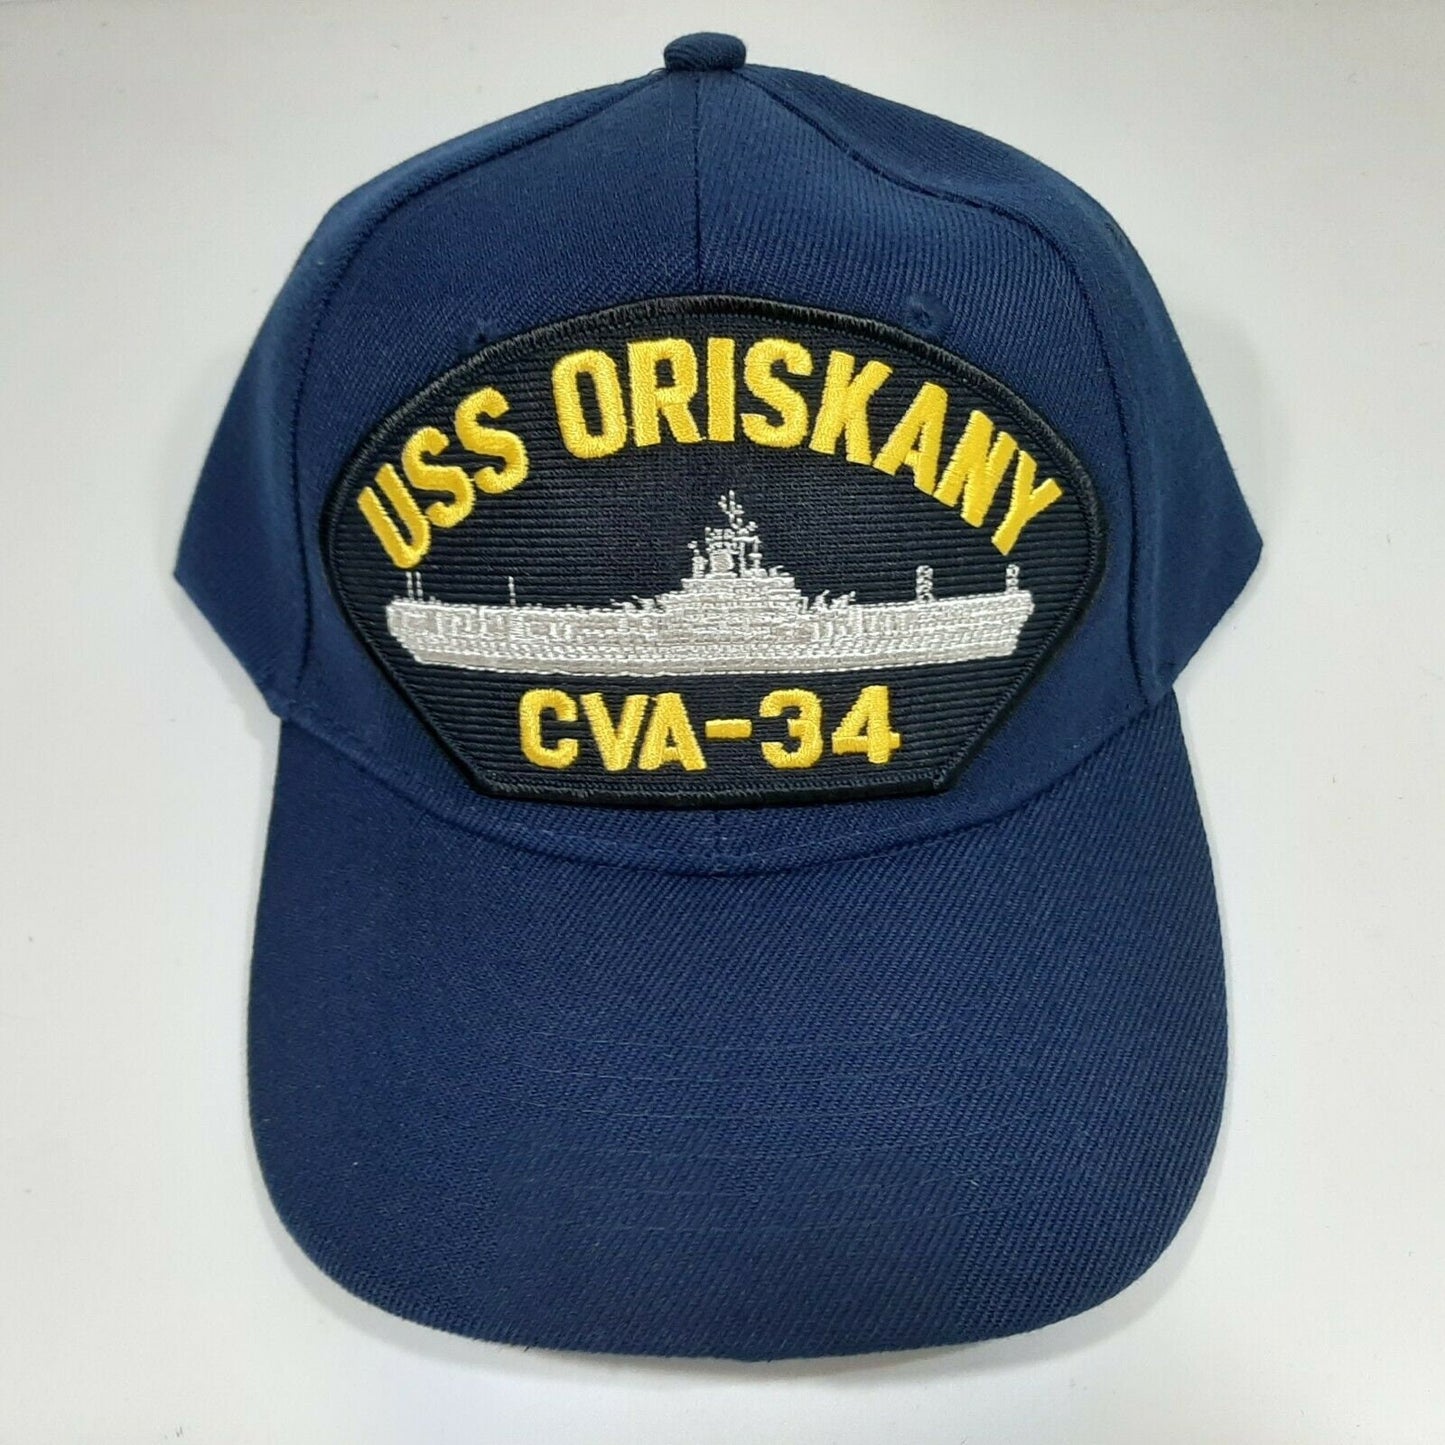 US Navy USS Oriskany CVA-34 Men's Patch Cap Embroidered Hat Navy Blue Acrylic